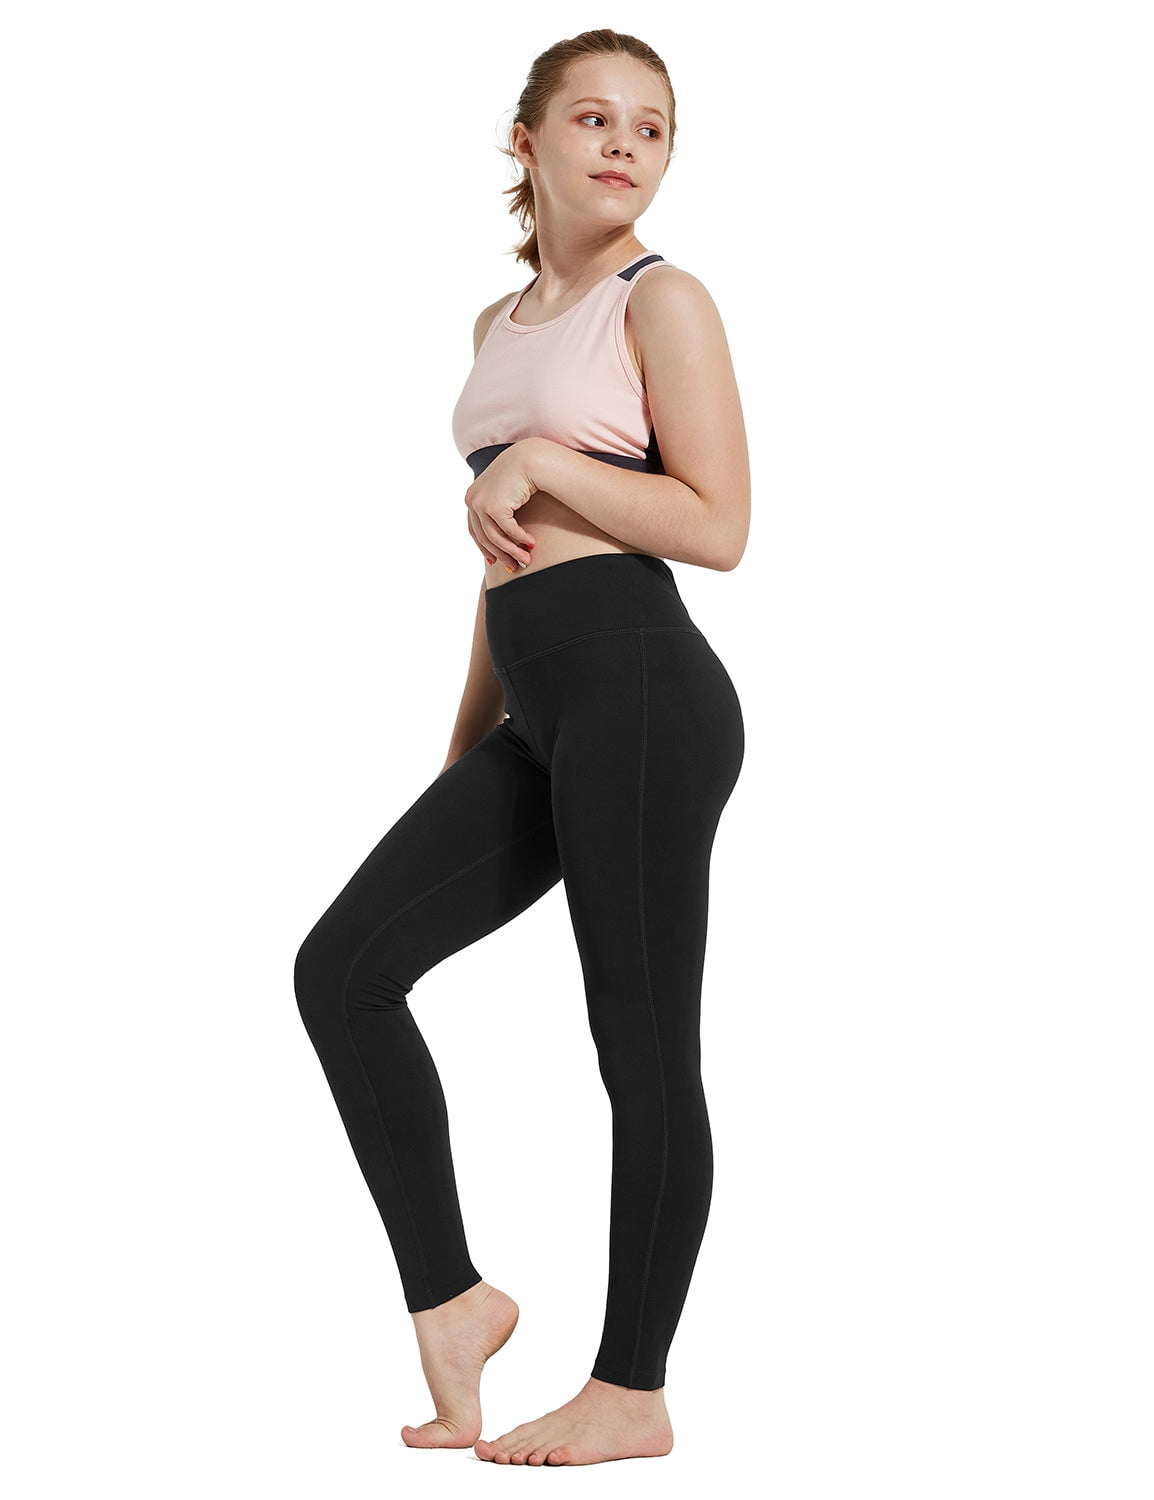 BALEAF Youth Girl's Athletic Dance Leggings Compression Pants